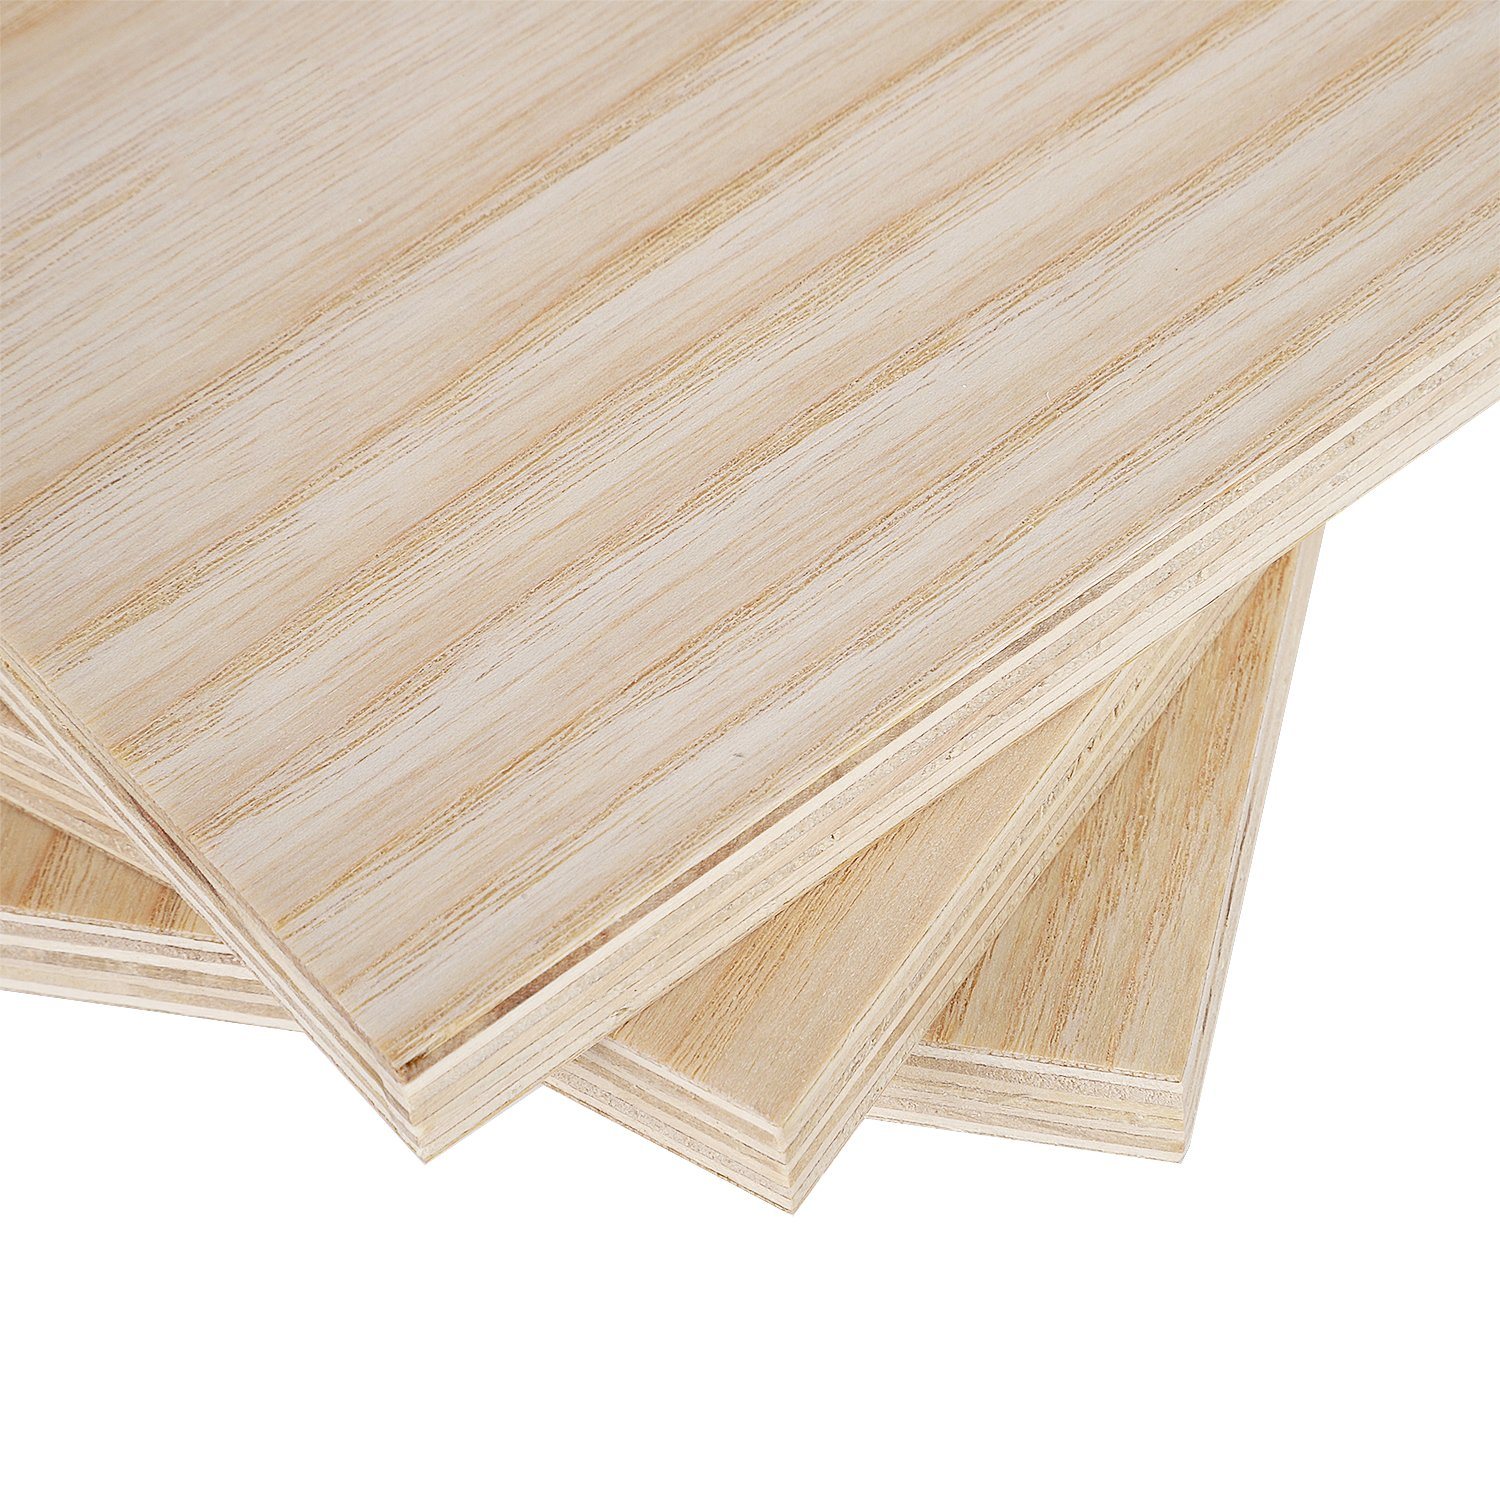 China High Quality Oak Wood Plywood Board Wholesale Laminated Plywood for Decoration